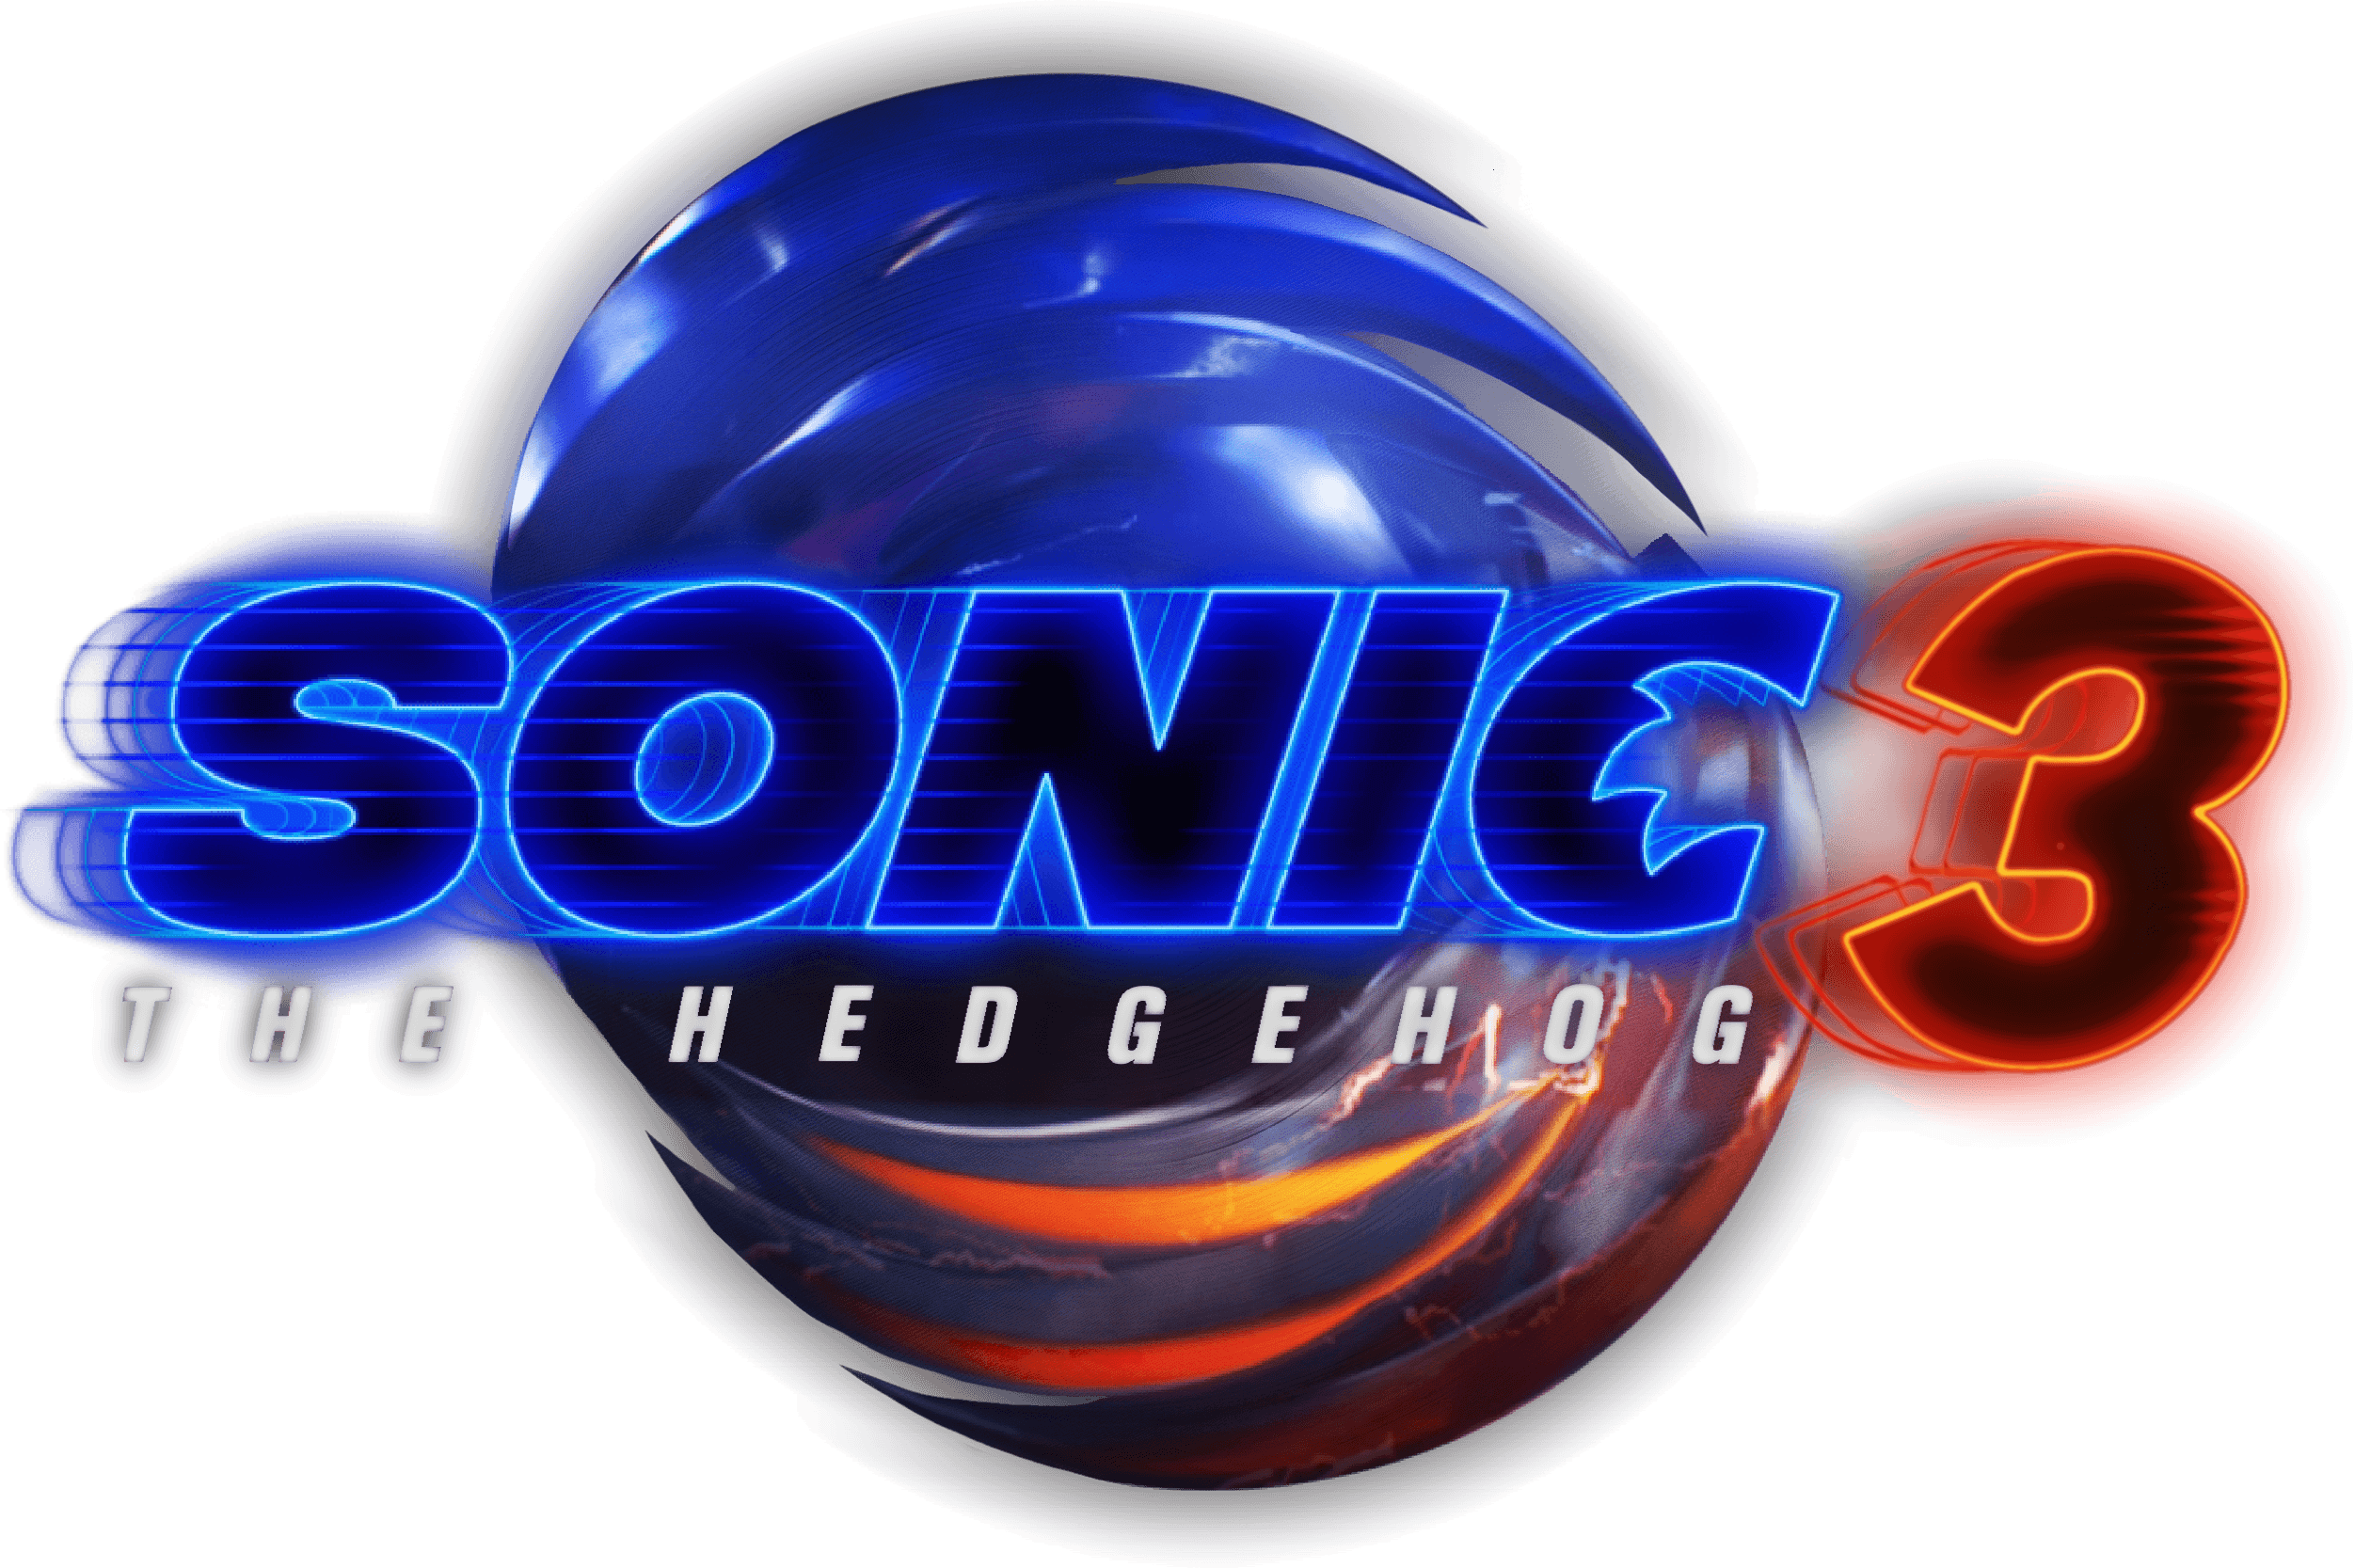 Sonic the Hedgehog 3 logo